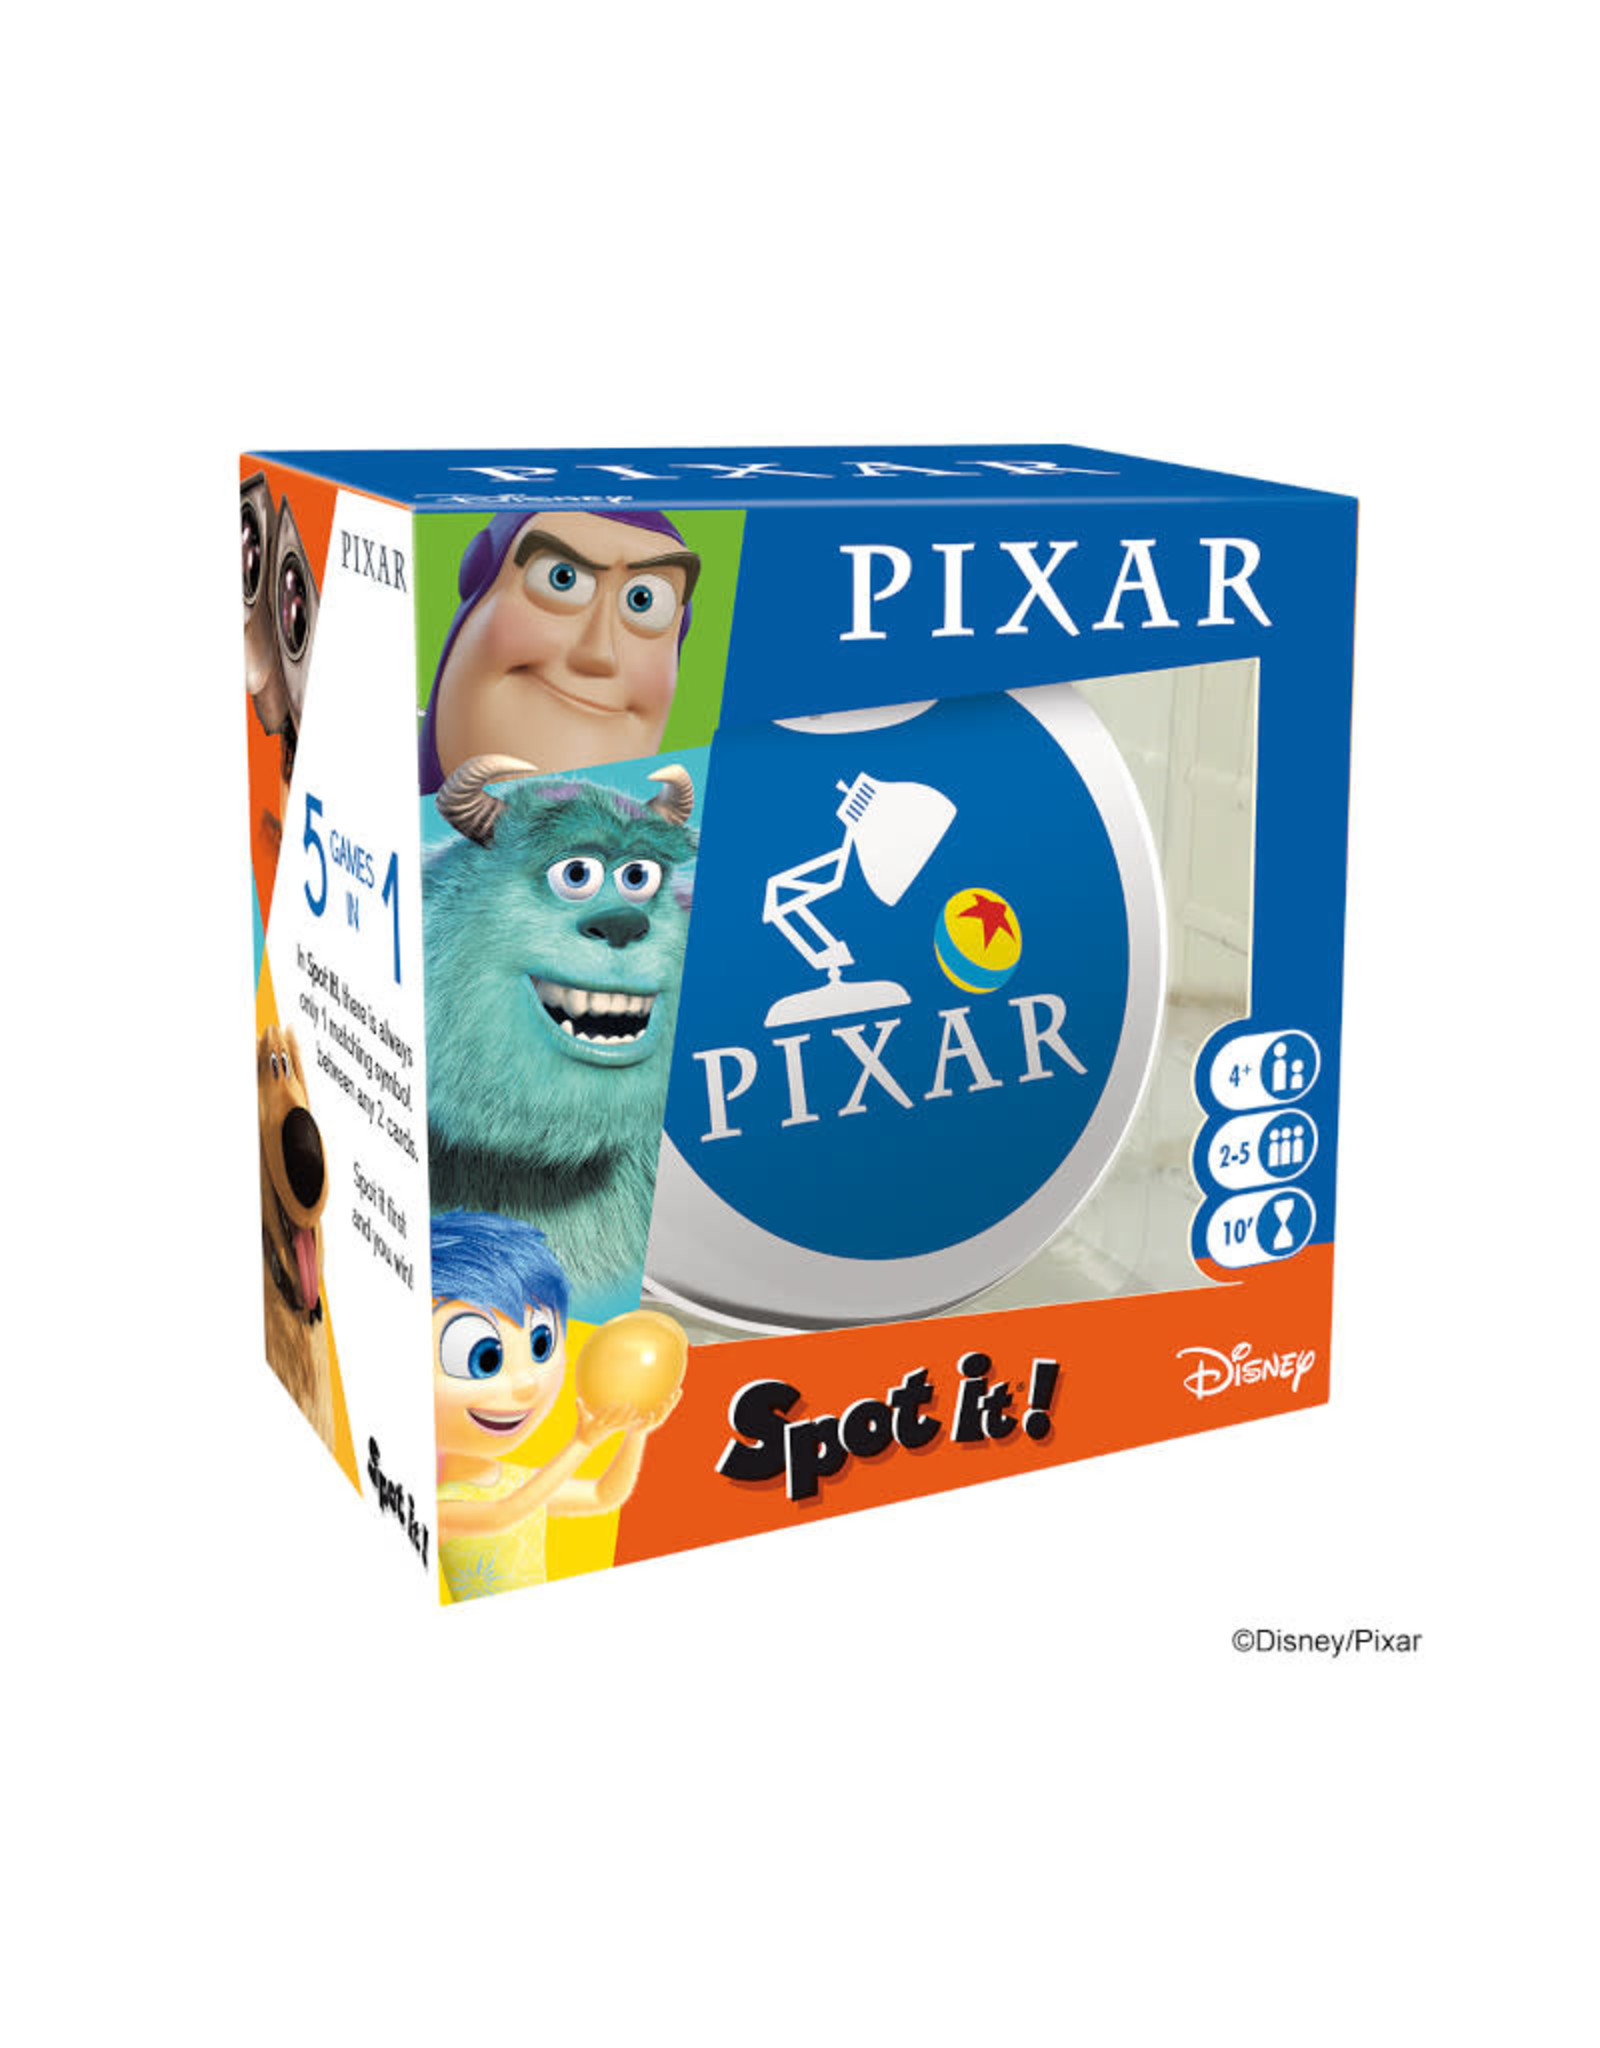 Spot It! Pixar